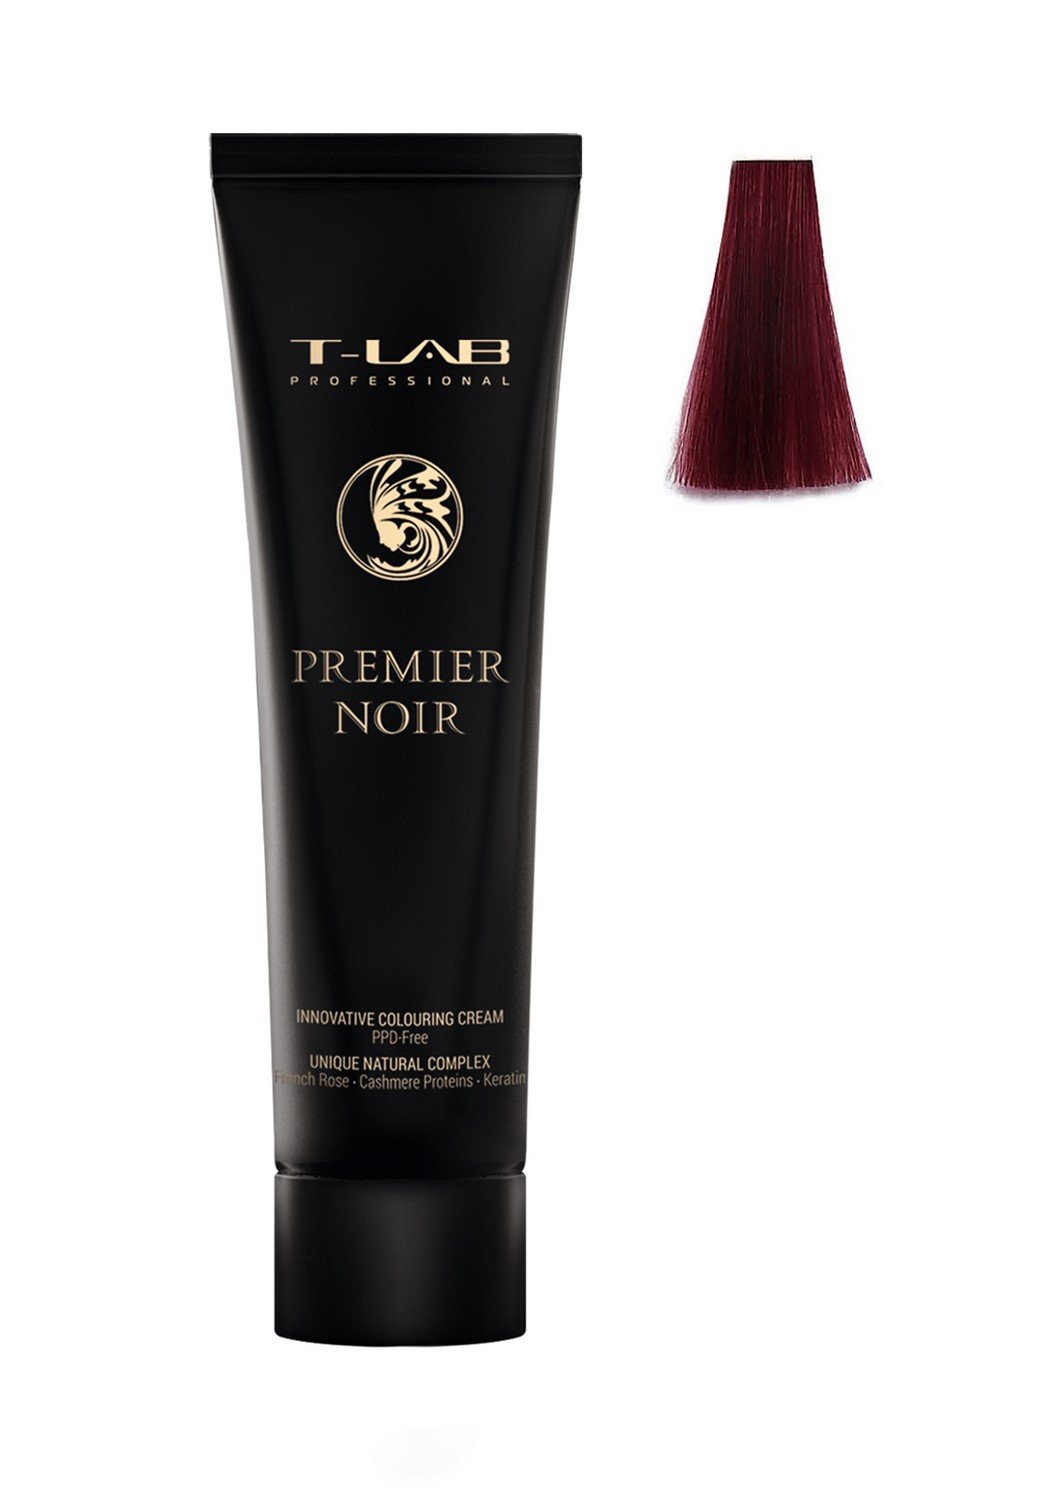 Крем-фарба T-LAB Professional Premier Noir colouring cream, відтінок 6.65 (dark intense red mahogany blonde) - фото 2